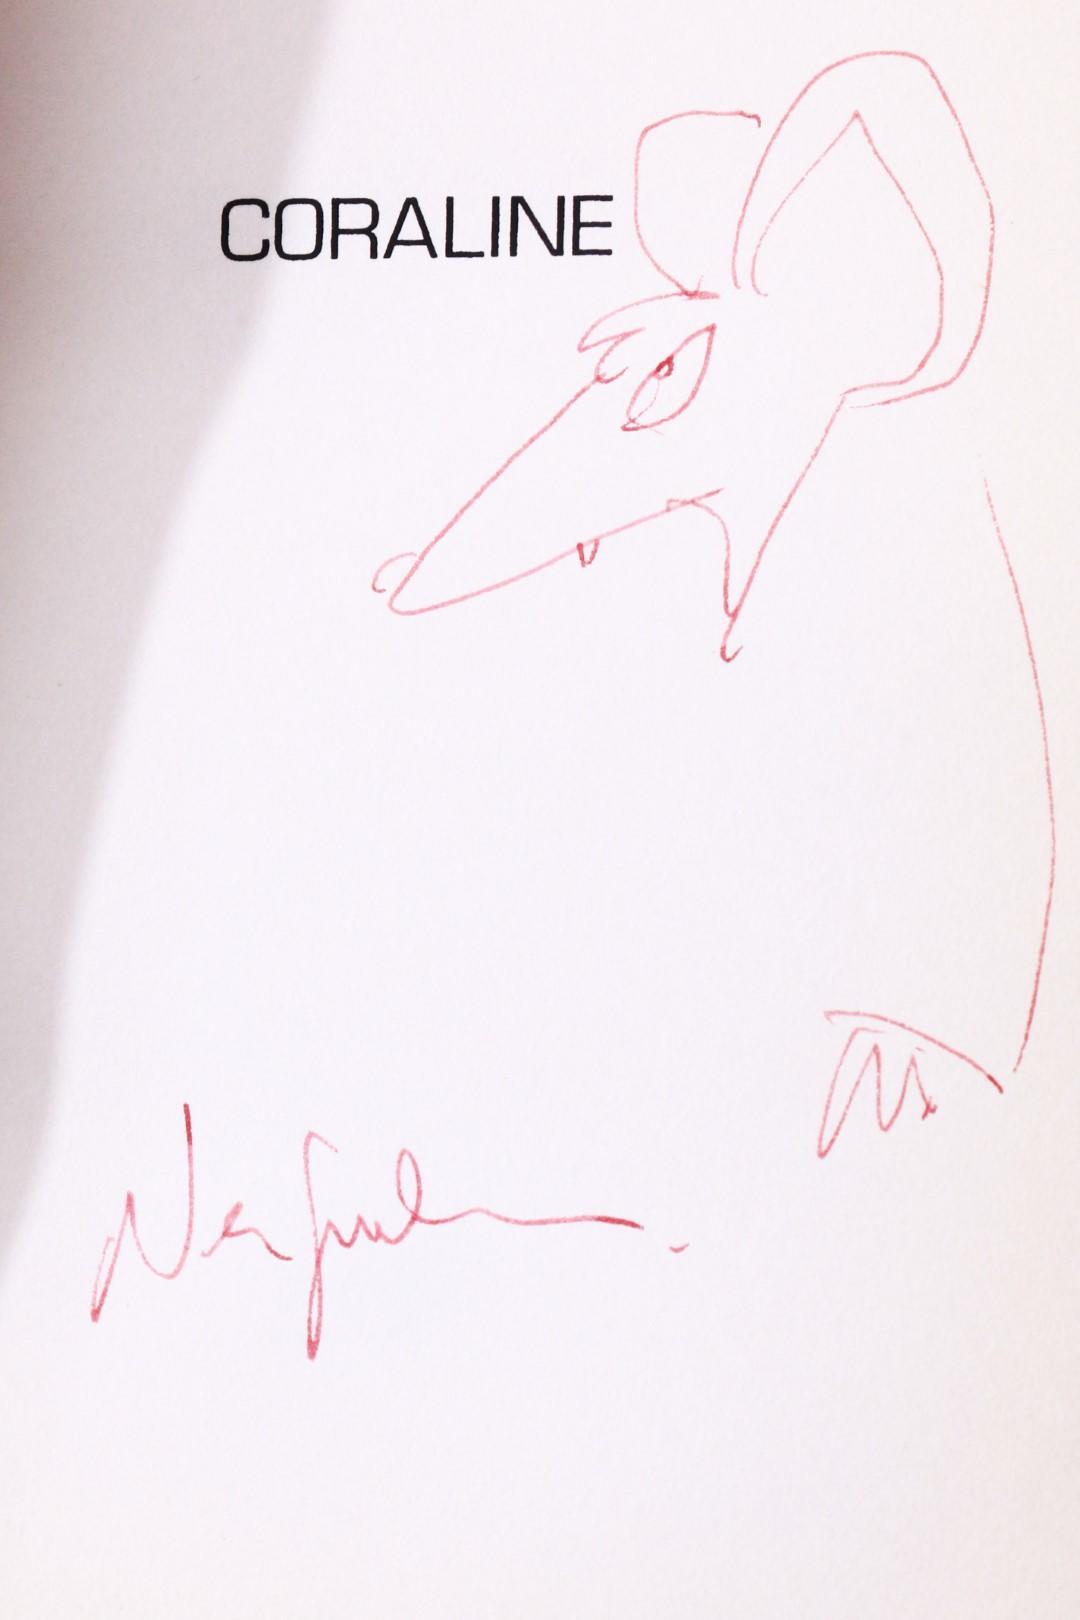 Neil Gaiman - Coraline - Bloomsbury, 2002, Proof. Signed